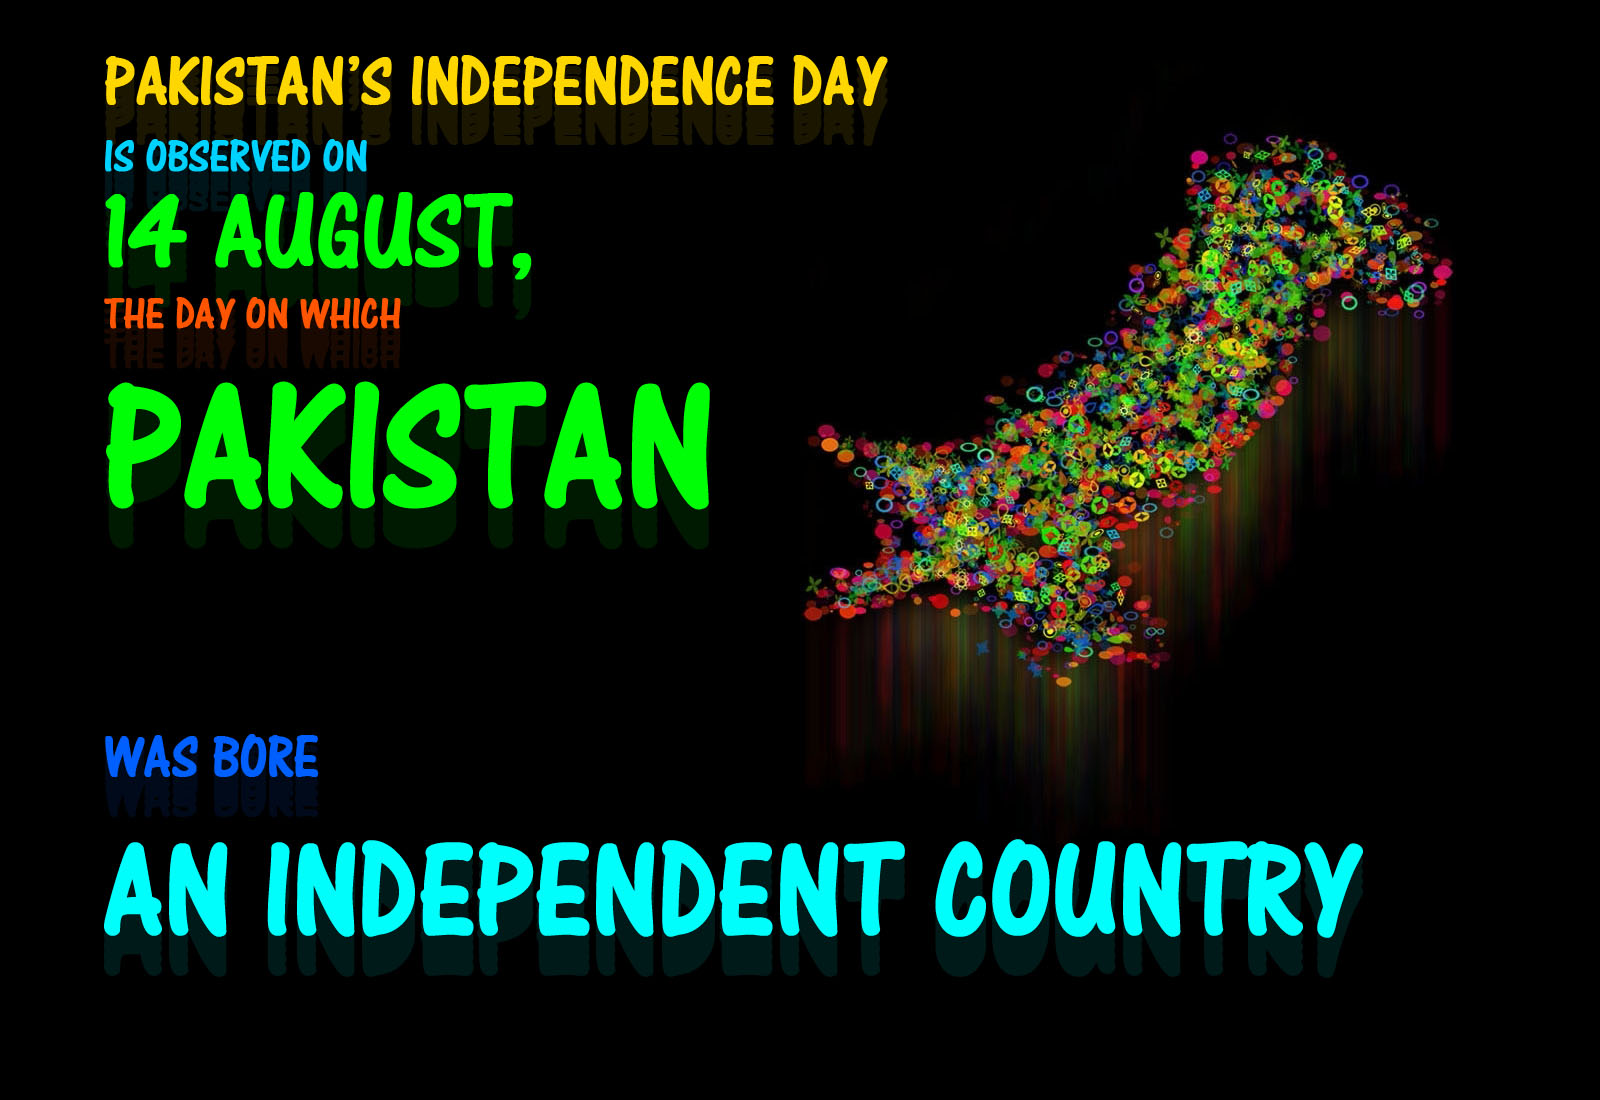 https://blogger.googleusercontent.com/img/b/R29vZ2xl/AVvXsEhSZJyi4ZNFbtl6ziPx-gAp1502ytWLYQLEuLOMxnlEBVns5oi9LQsuPGQz6jfVBkz7oPVQzQUhyphenhyphenENMEawUTrFCWcIYDsn0aq5SicFpYte4eXY3bxWj6JvmlVp1iCRVbEKusvHekskXlX2x/s1600/pakistan-independence-day-wallpaper-2012-4.jpg